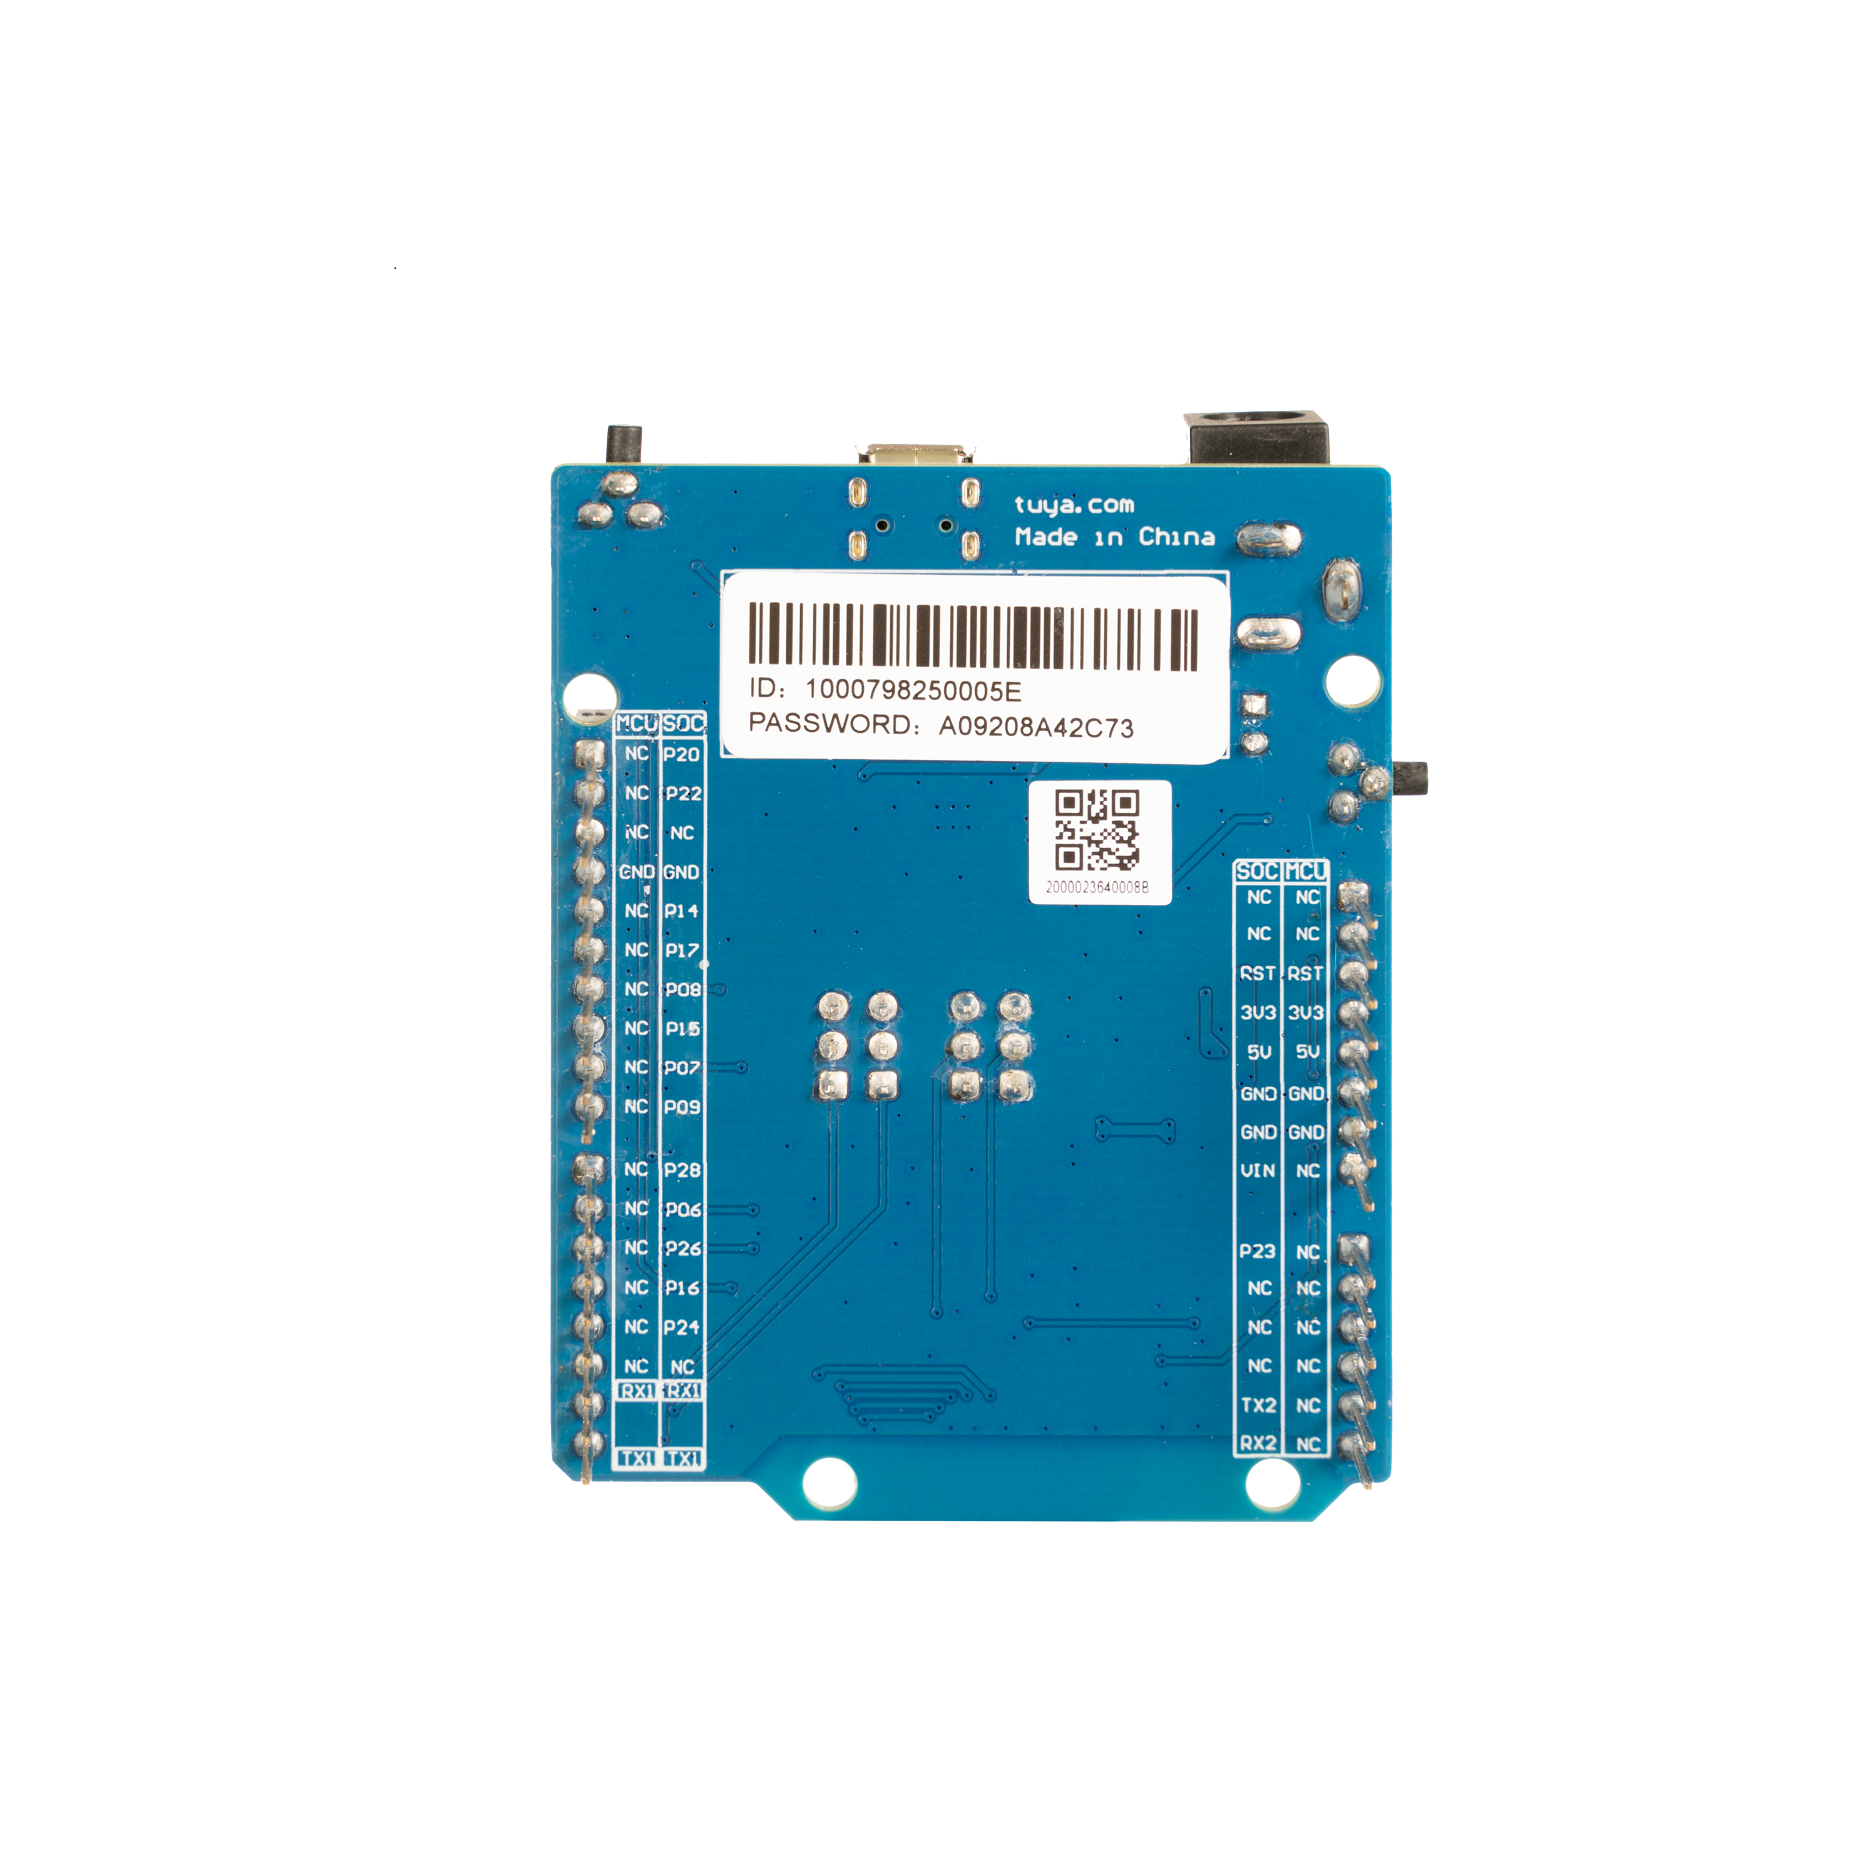 Wi-Fi and Bluetooth Combo SoC Board V2 (CBU)